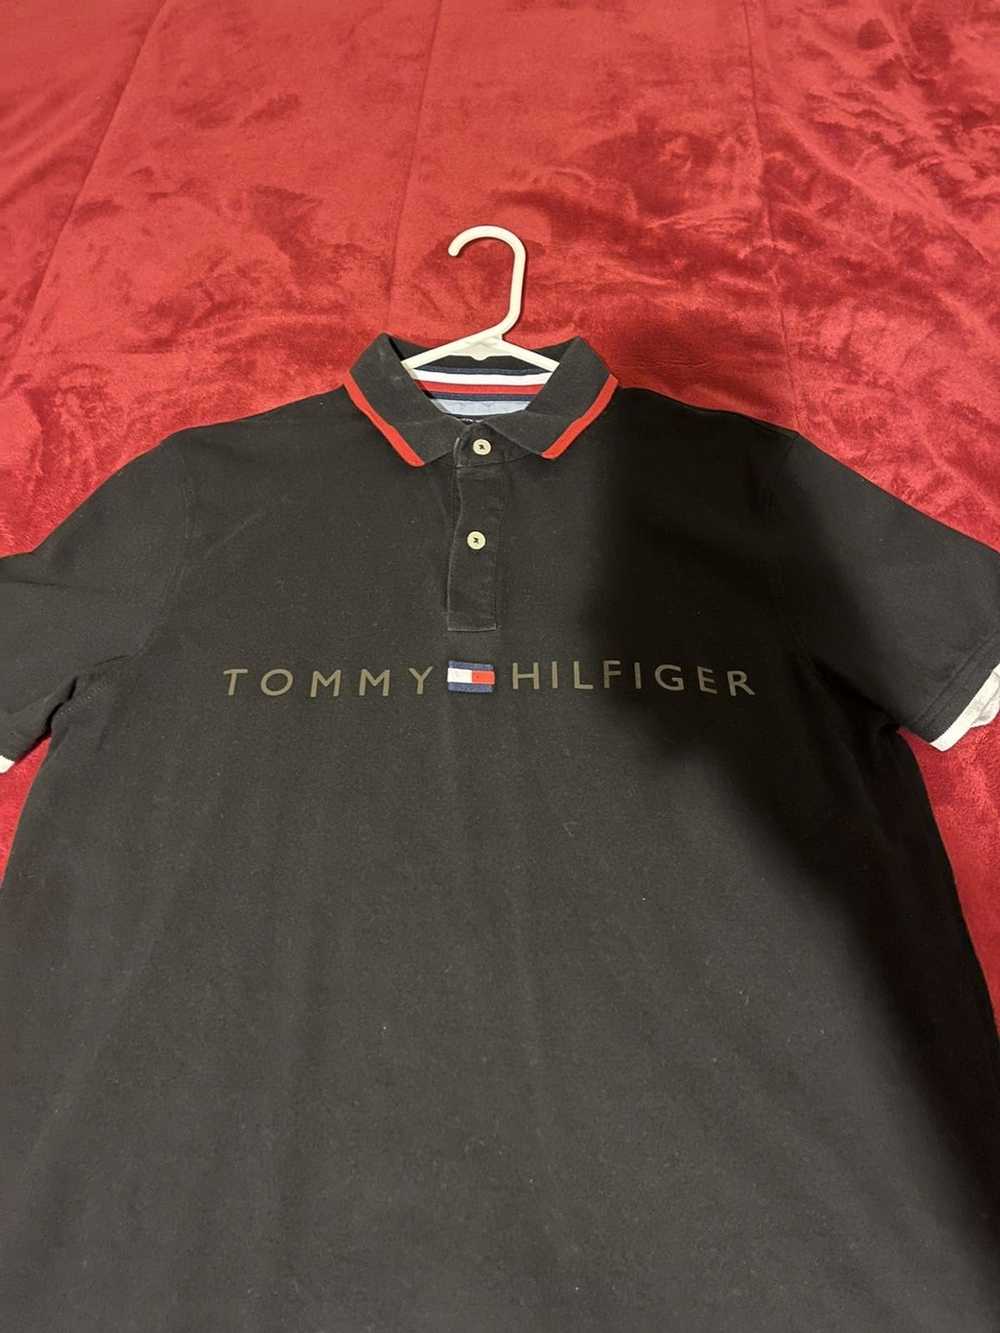 Tommy Hilfiger Tommy Hilfiger polo shirt - image 2